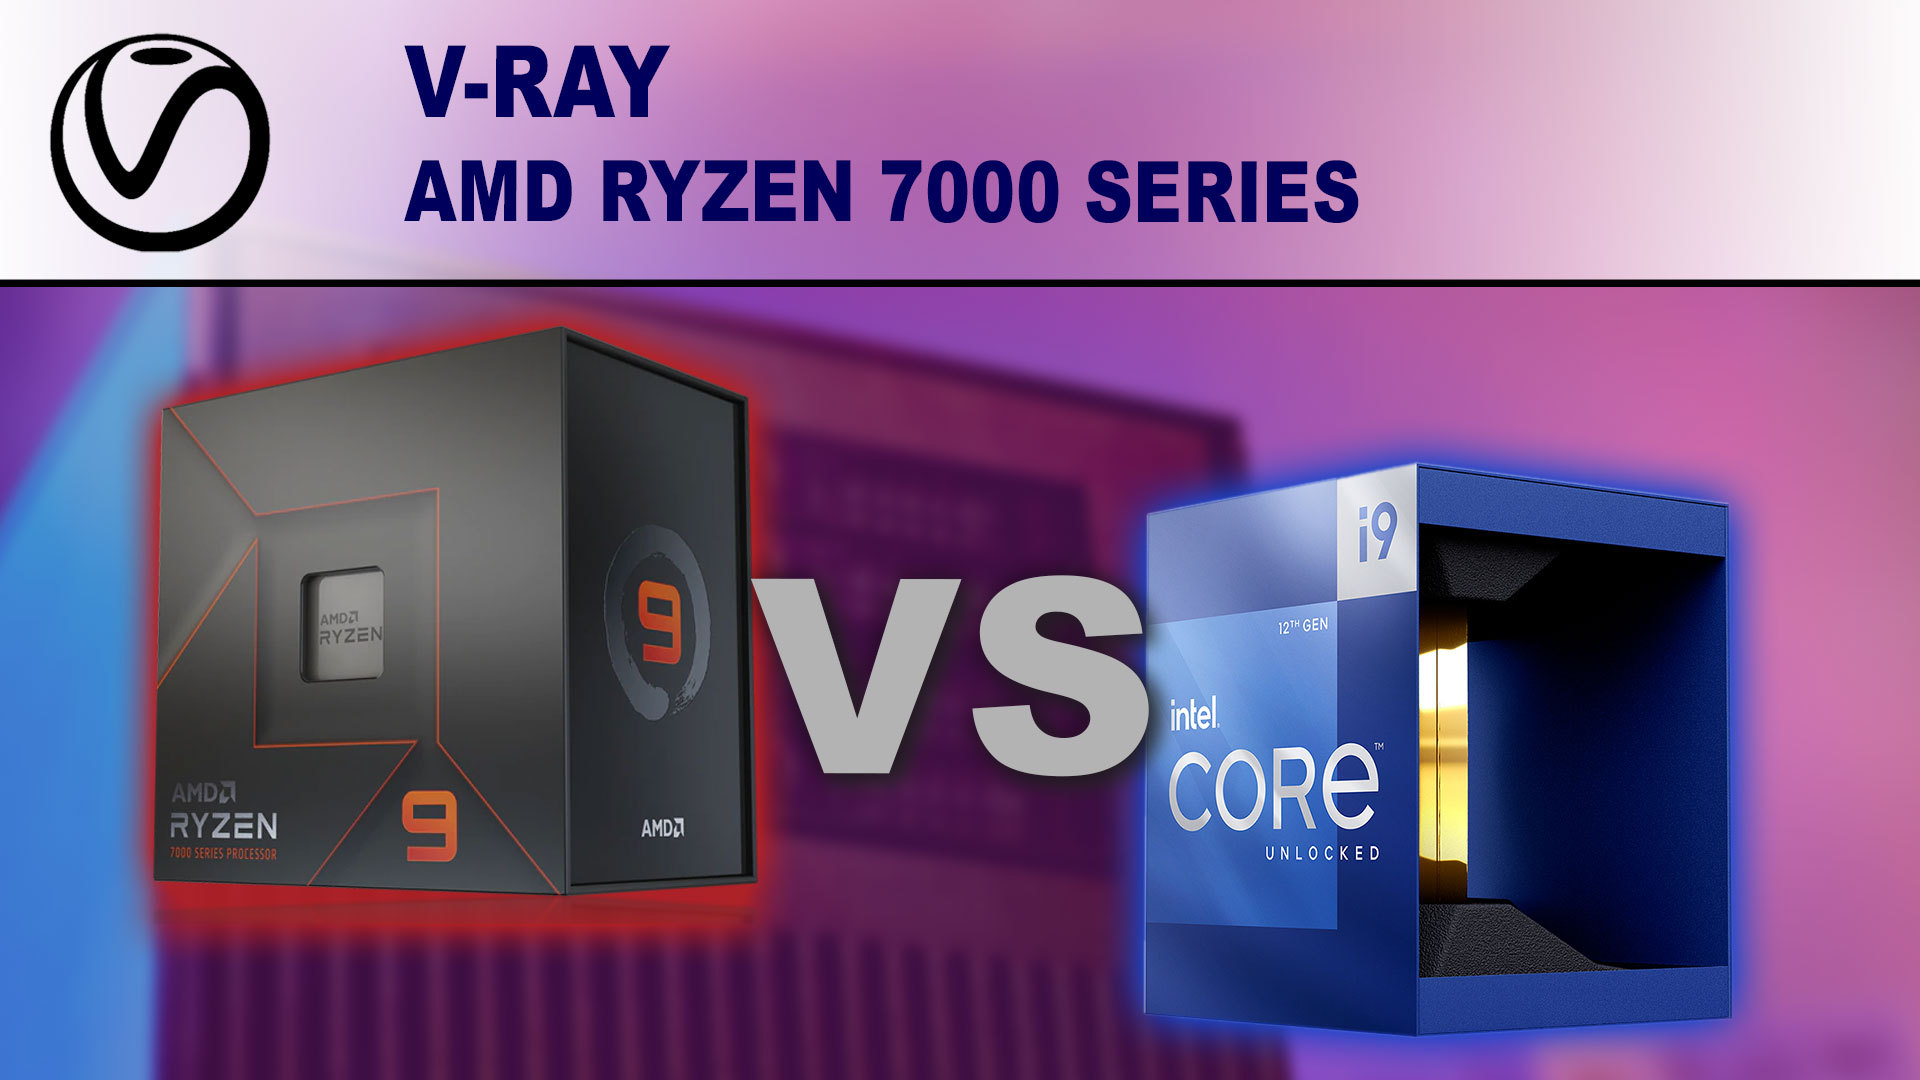 V-Ray: AMD Ryzen 7000 Series vs Intel Core 12th Gen